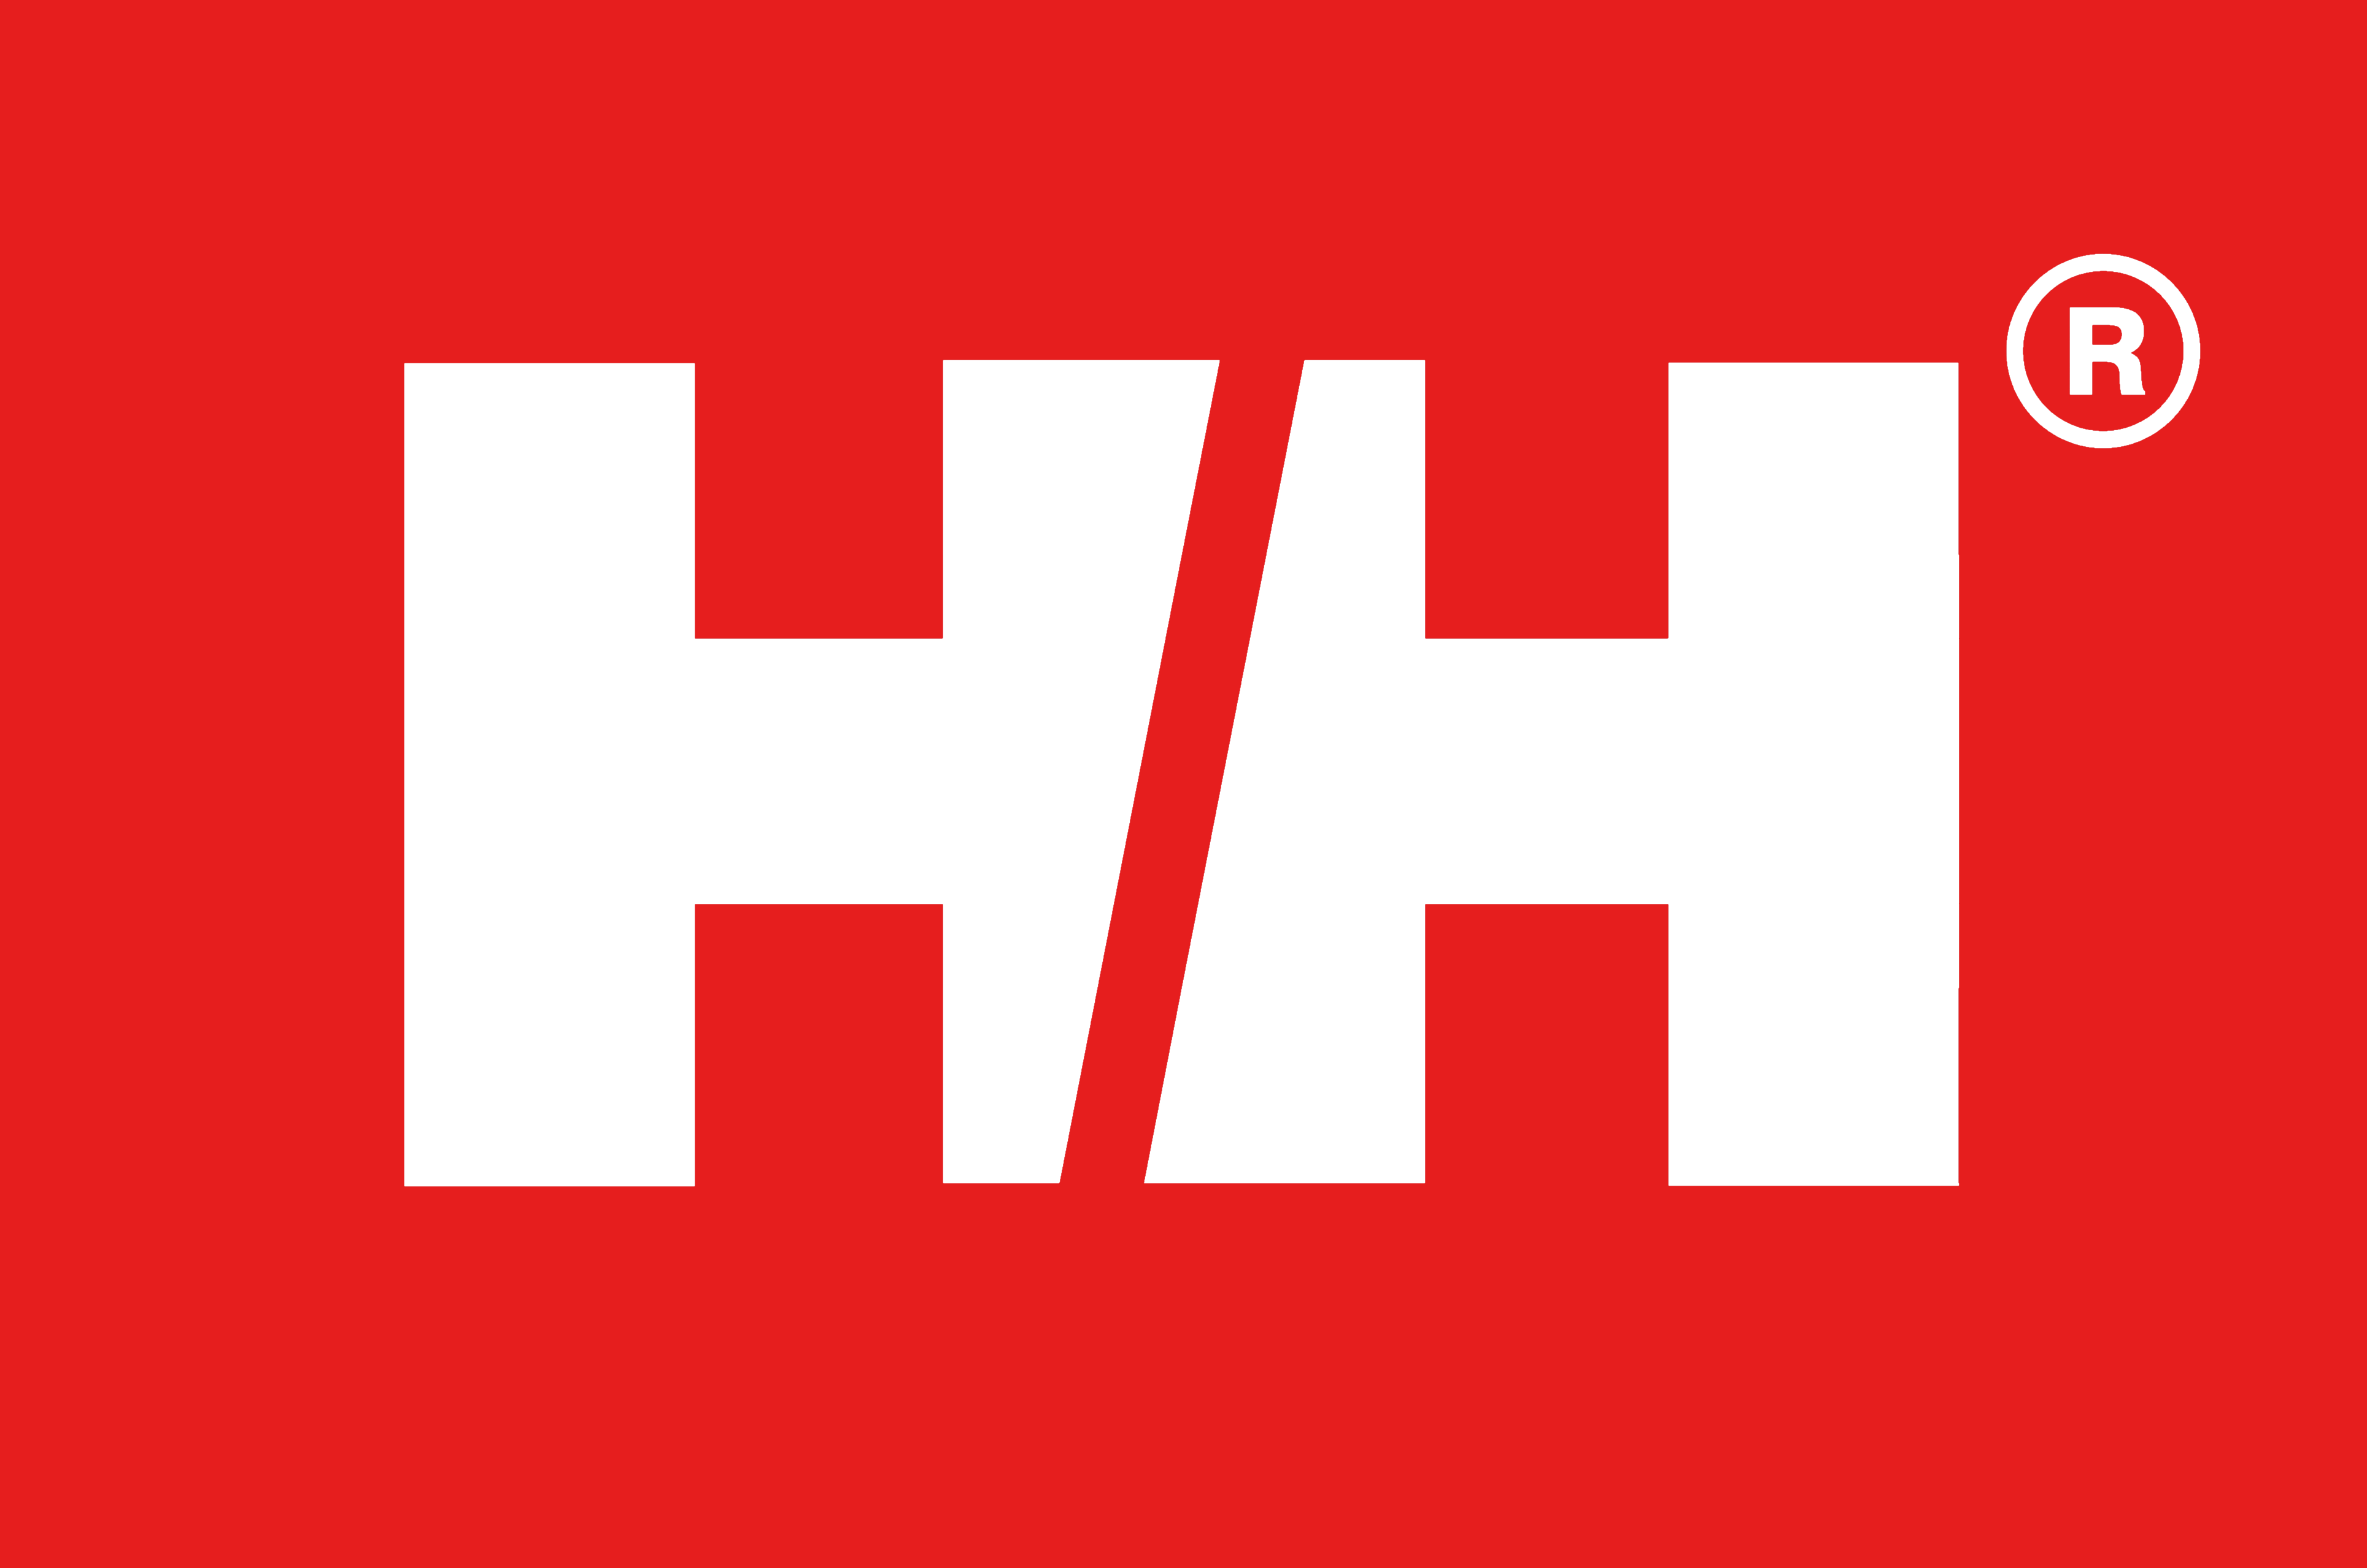 HH Logo - HH, Helly Hansen – Logos Download